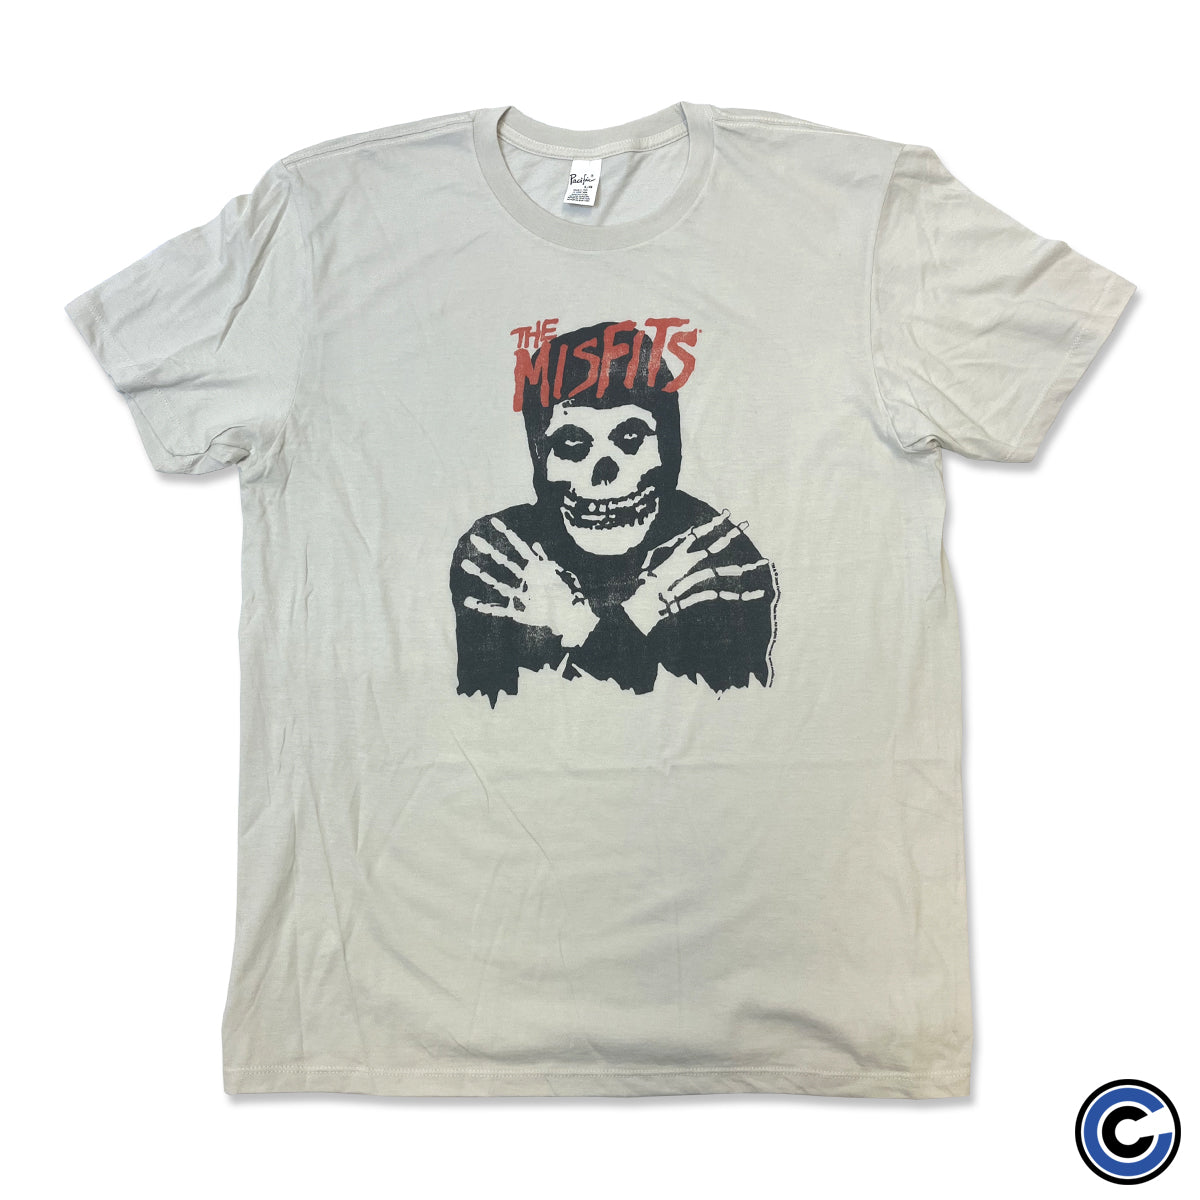 Misfits "Classic Skull" Shirt